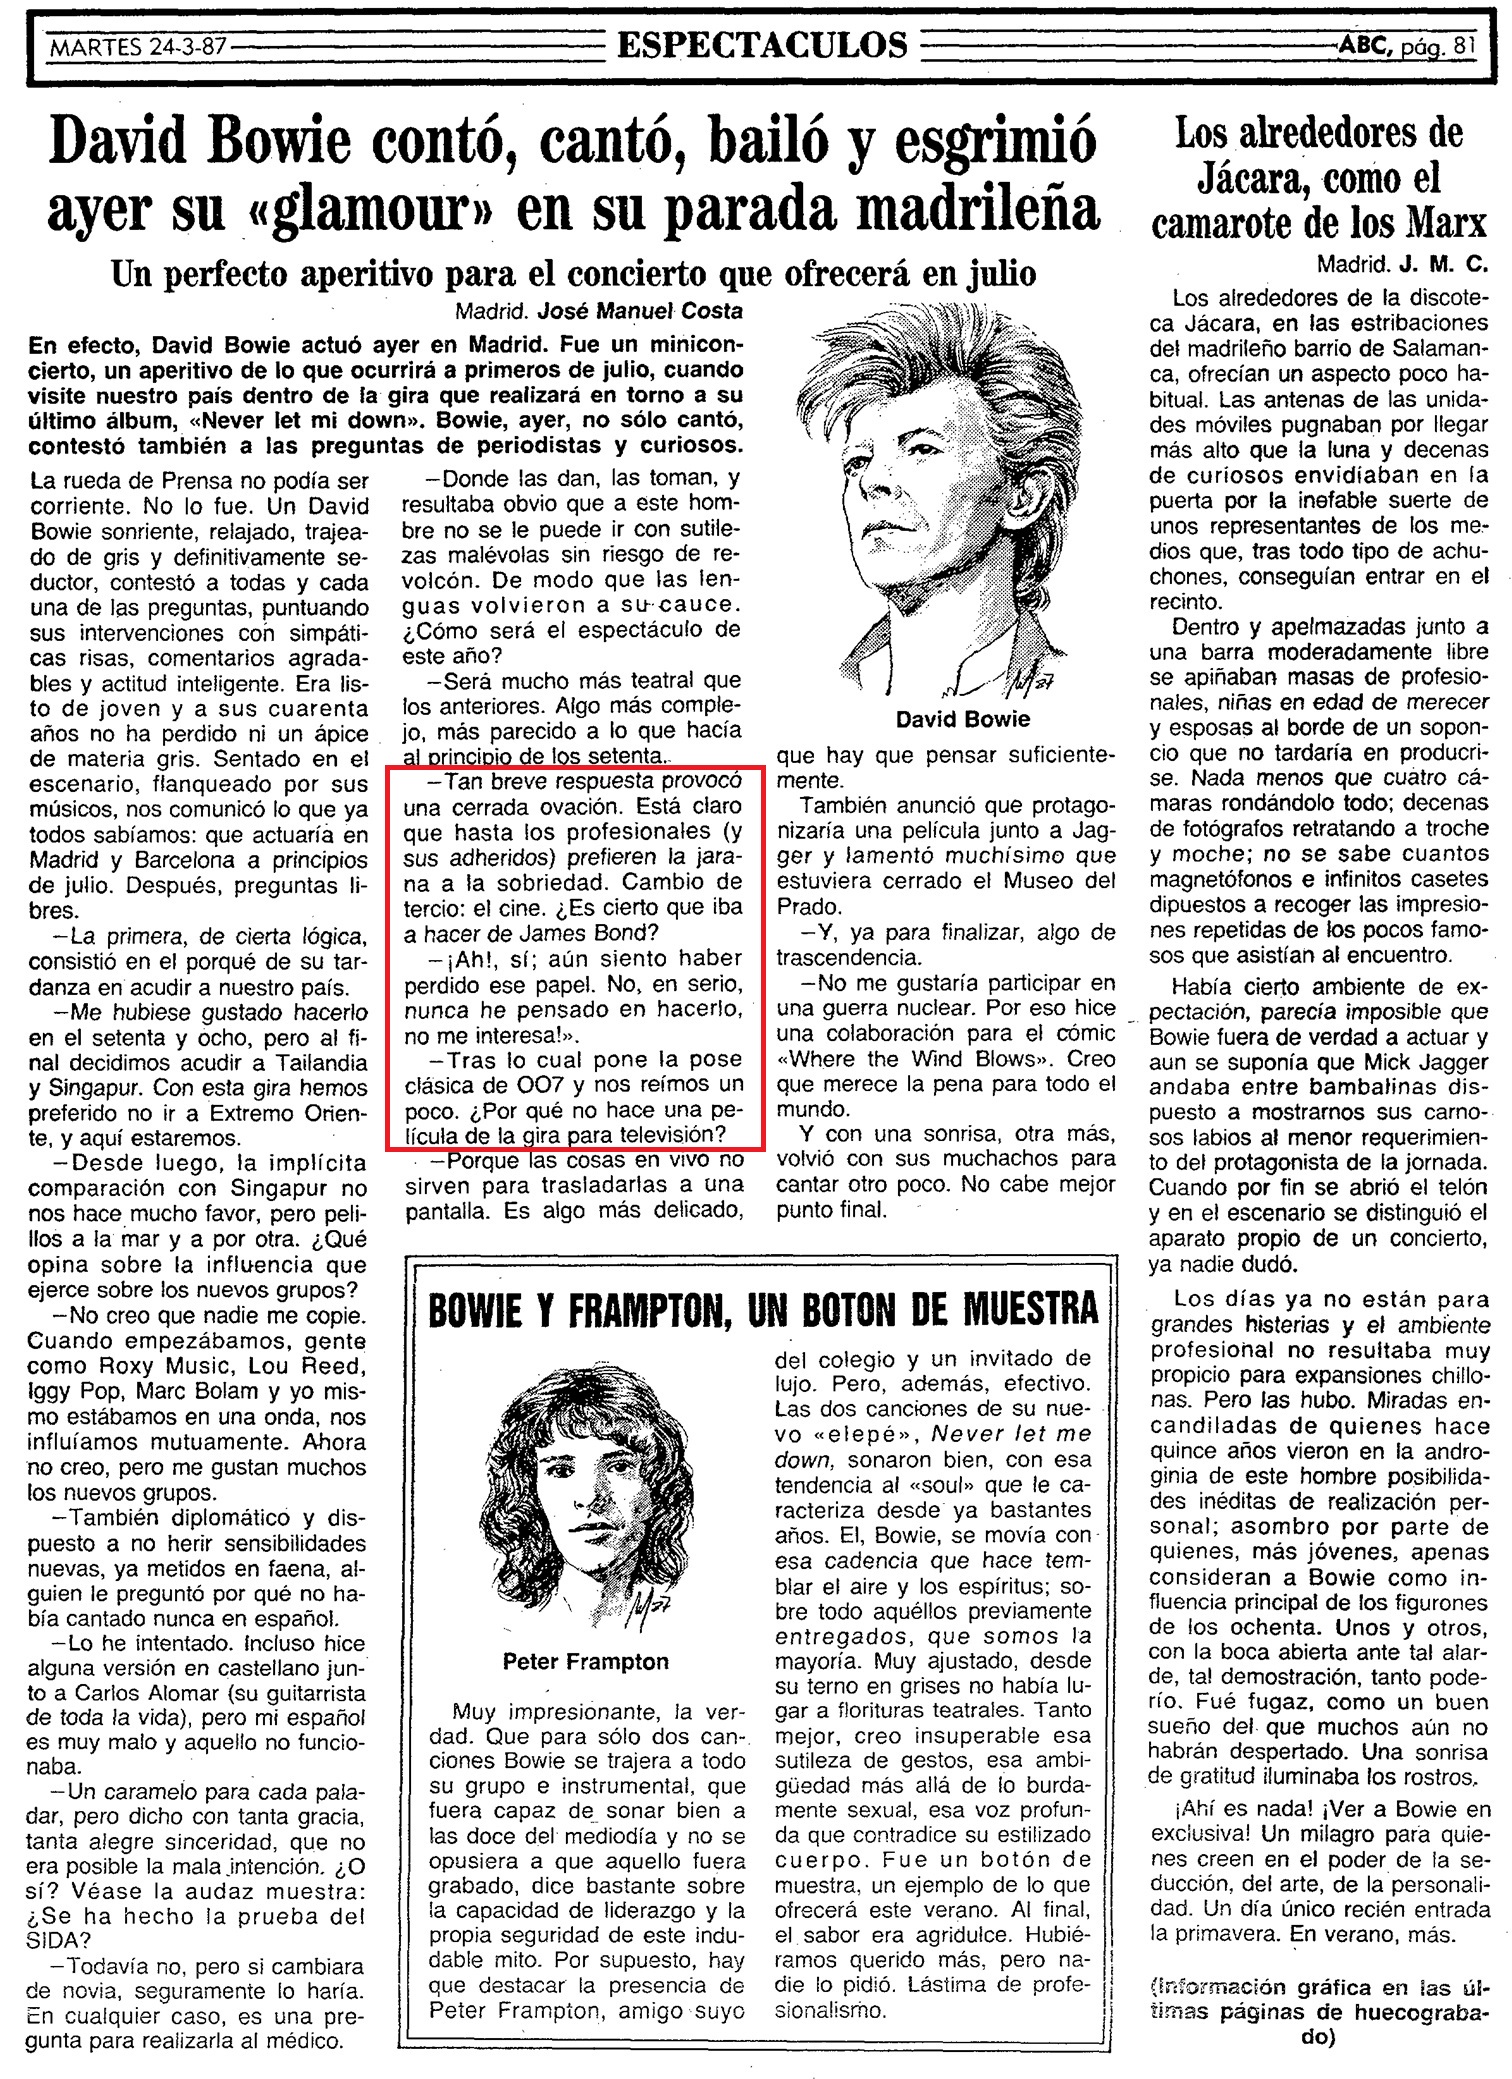 14 1987 03 24 ABC Madrid 081 David Bowie